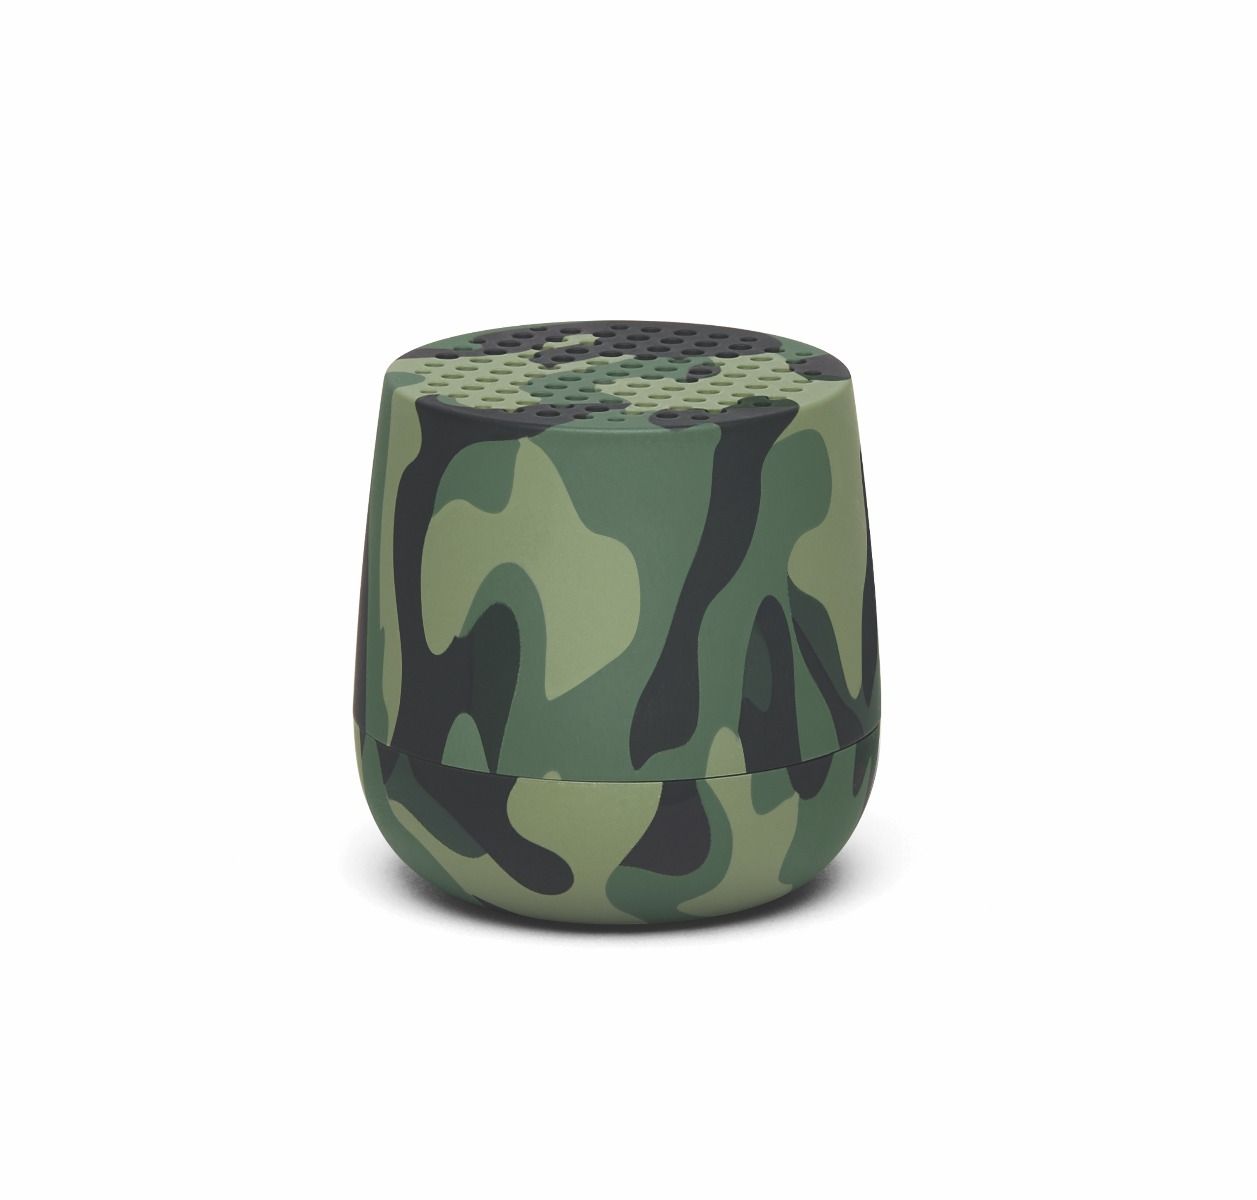  Mini boxa portabila - Camouflage | Lexon 